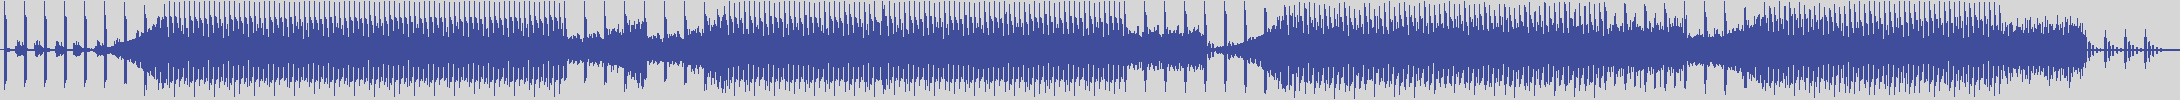 nf_boyz_records [NFY044] The Ninth Moonshine - Sleepy Scalp [Original Mix] audio wave form